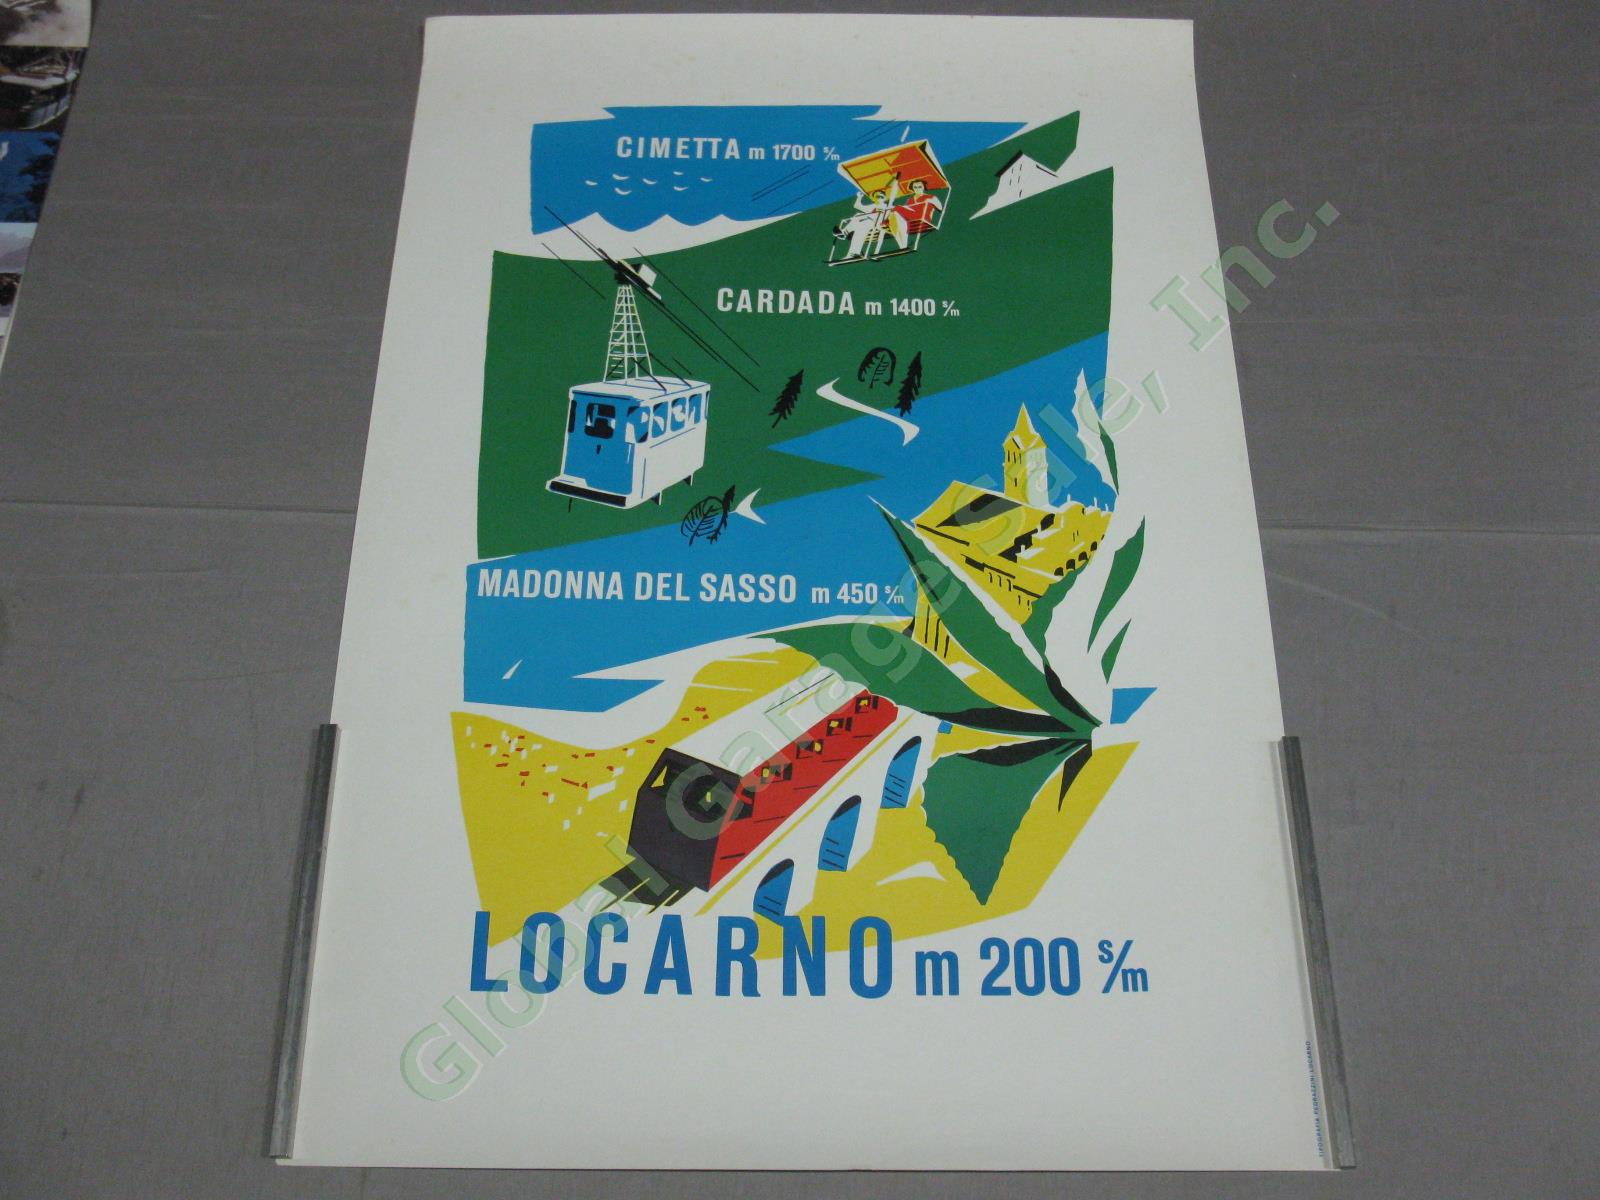 Vtg 1950s Swiss Travel Poster Locarno Ticino Switzerland Cog Railway Cable Car